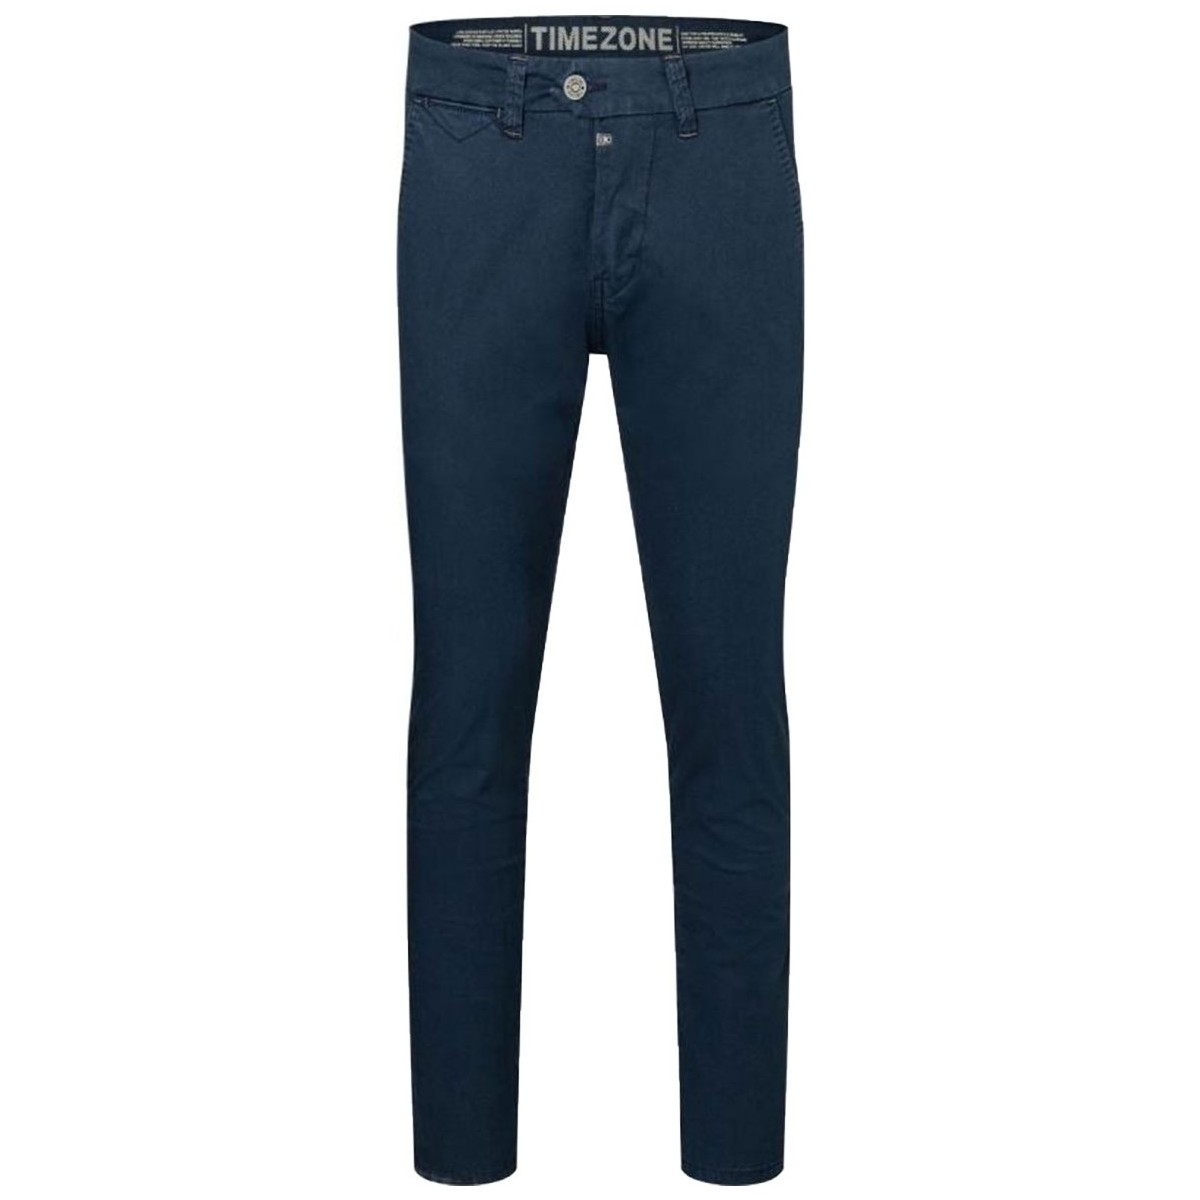 Vêtements Homme Jeans Blu Timezone Pantalon slim Janno  ref 52349 bleu nuit Bleu